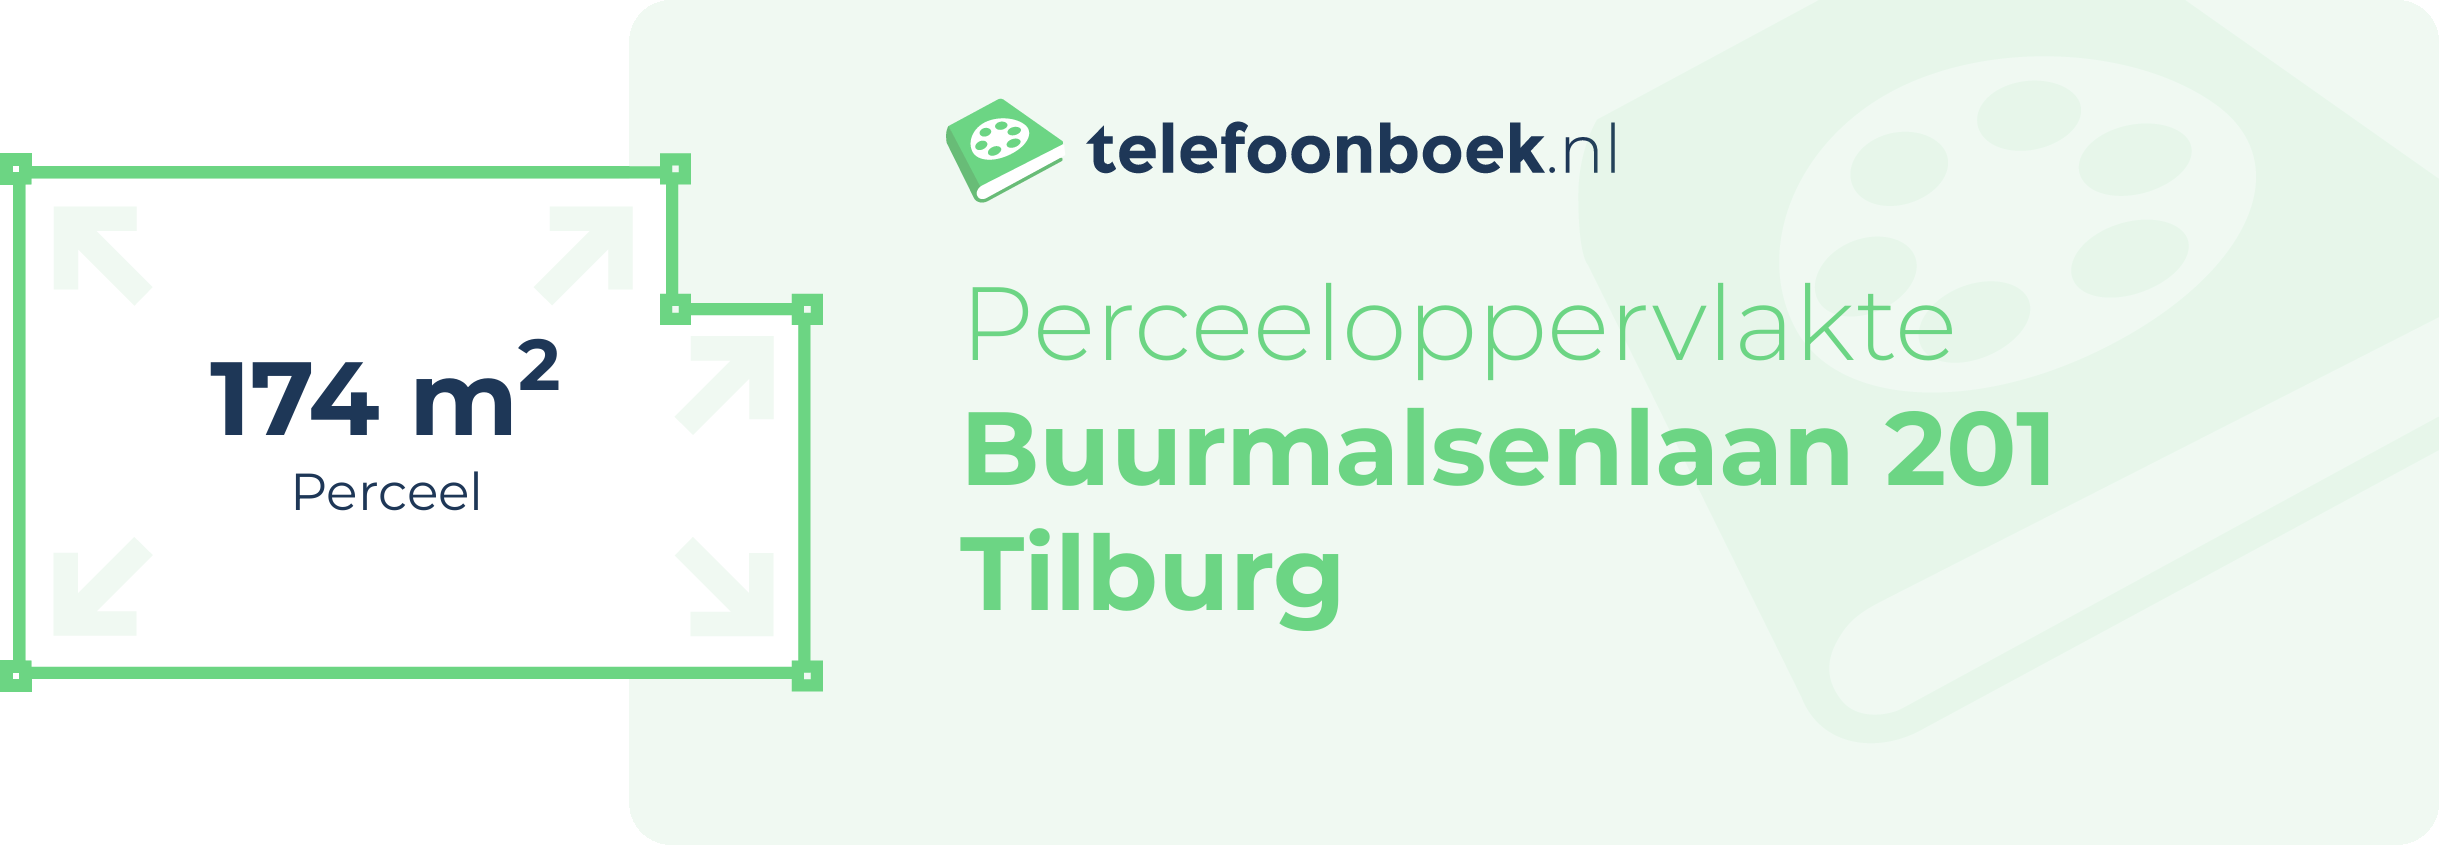 Perceeloppervlakte Buurmalsenlaan 201 Tilburg